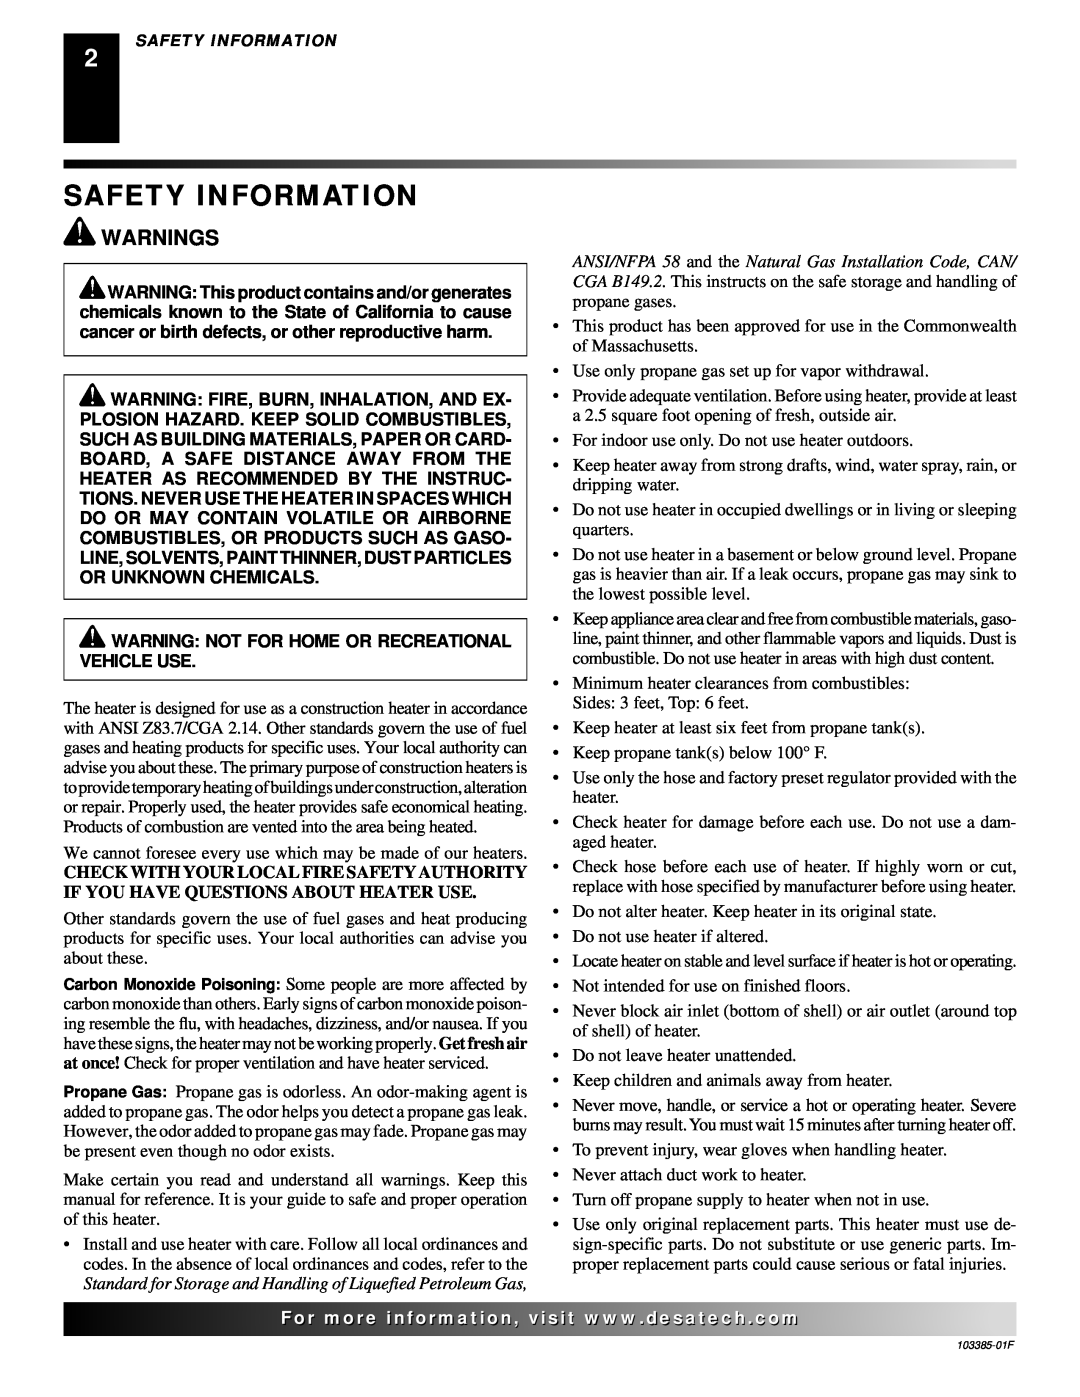 Desa 60, 40, 80 owner manual Safety Information, Warnings 